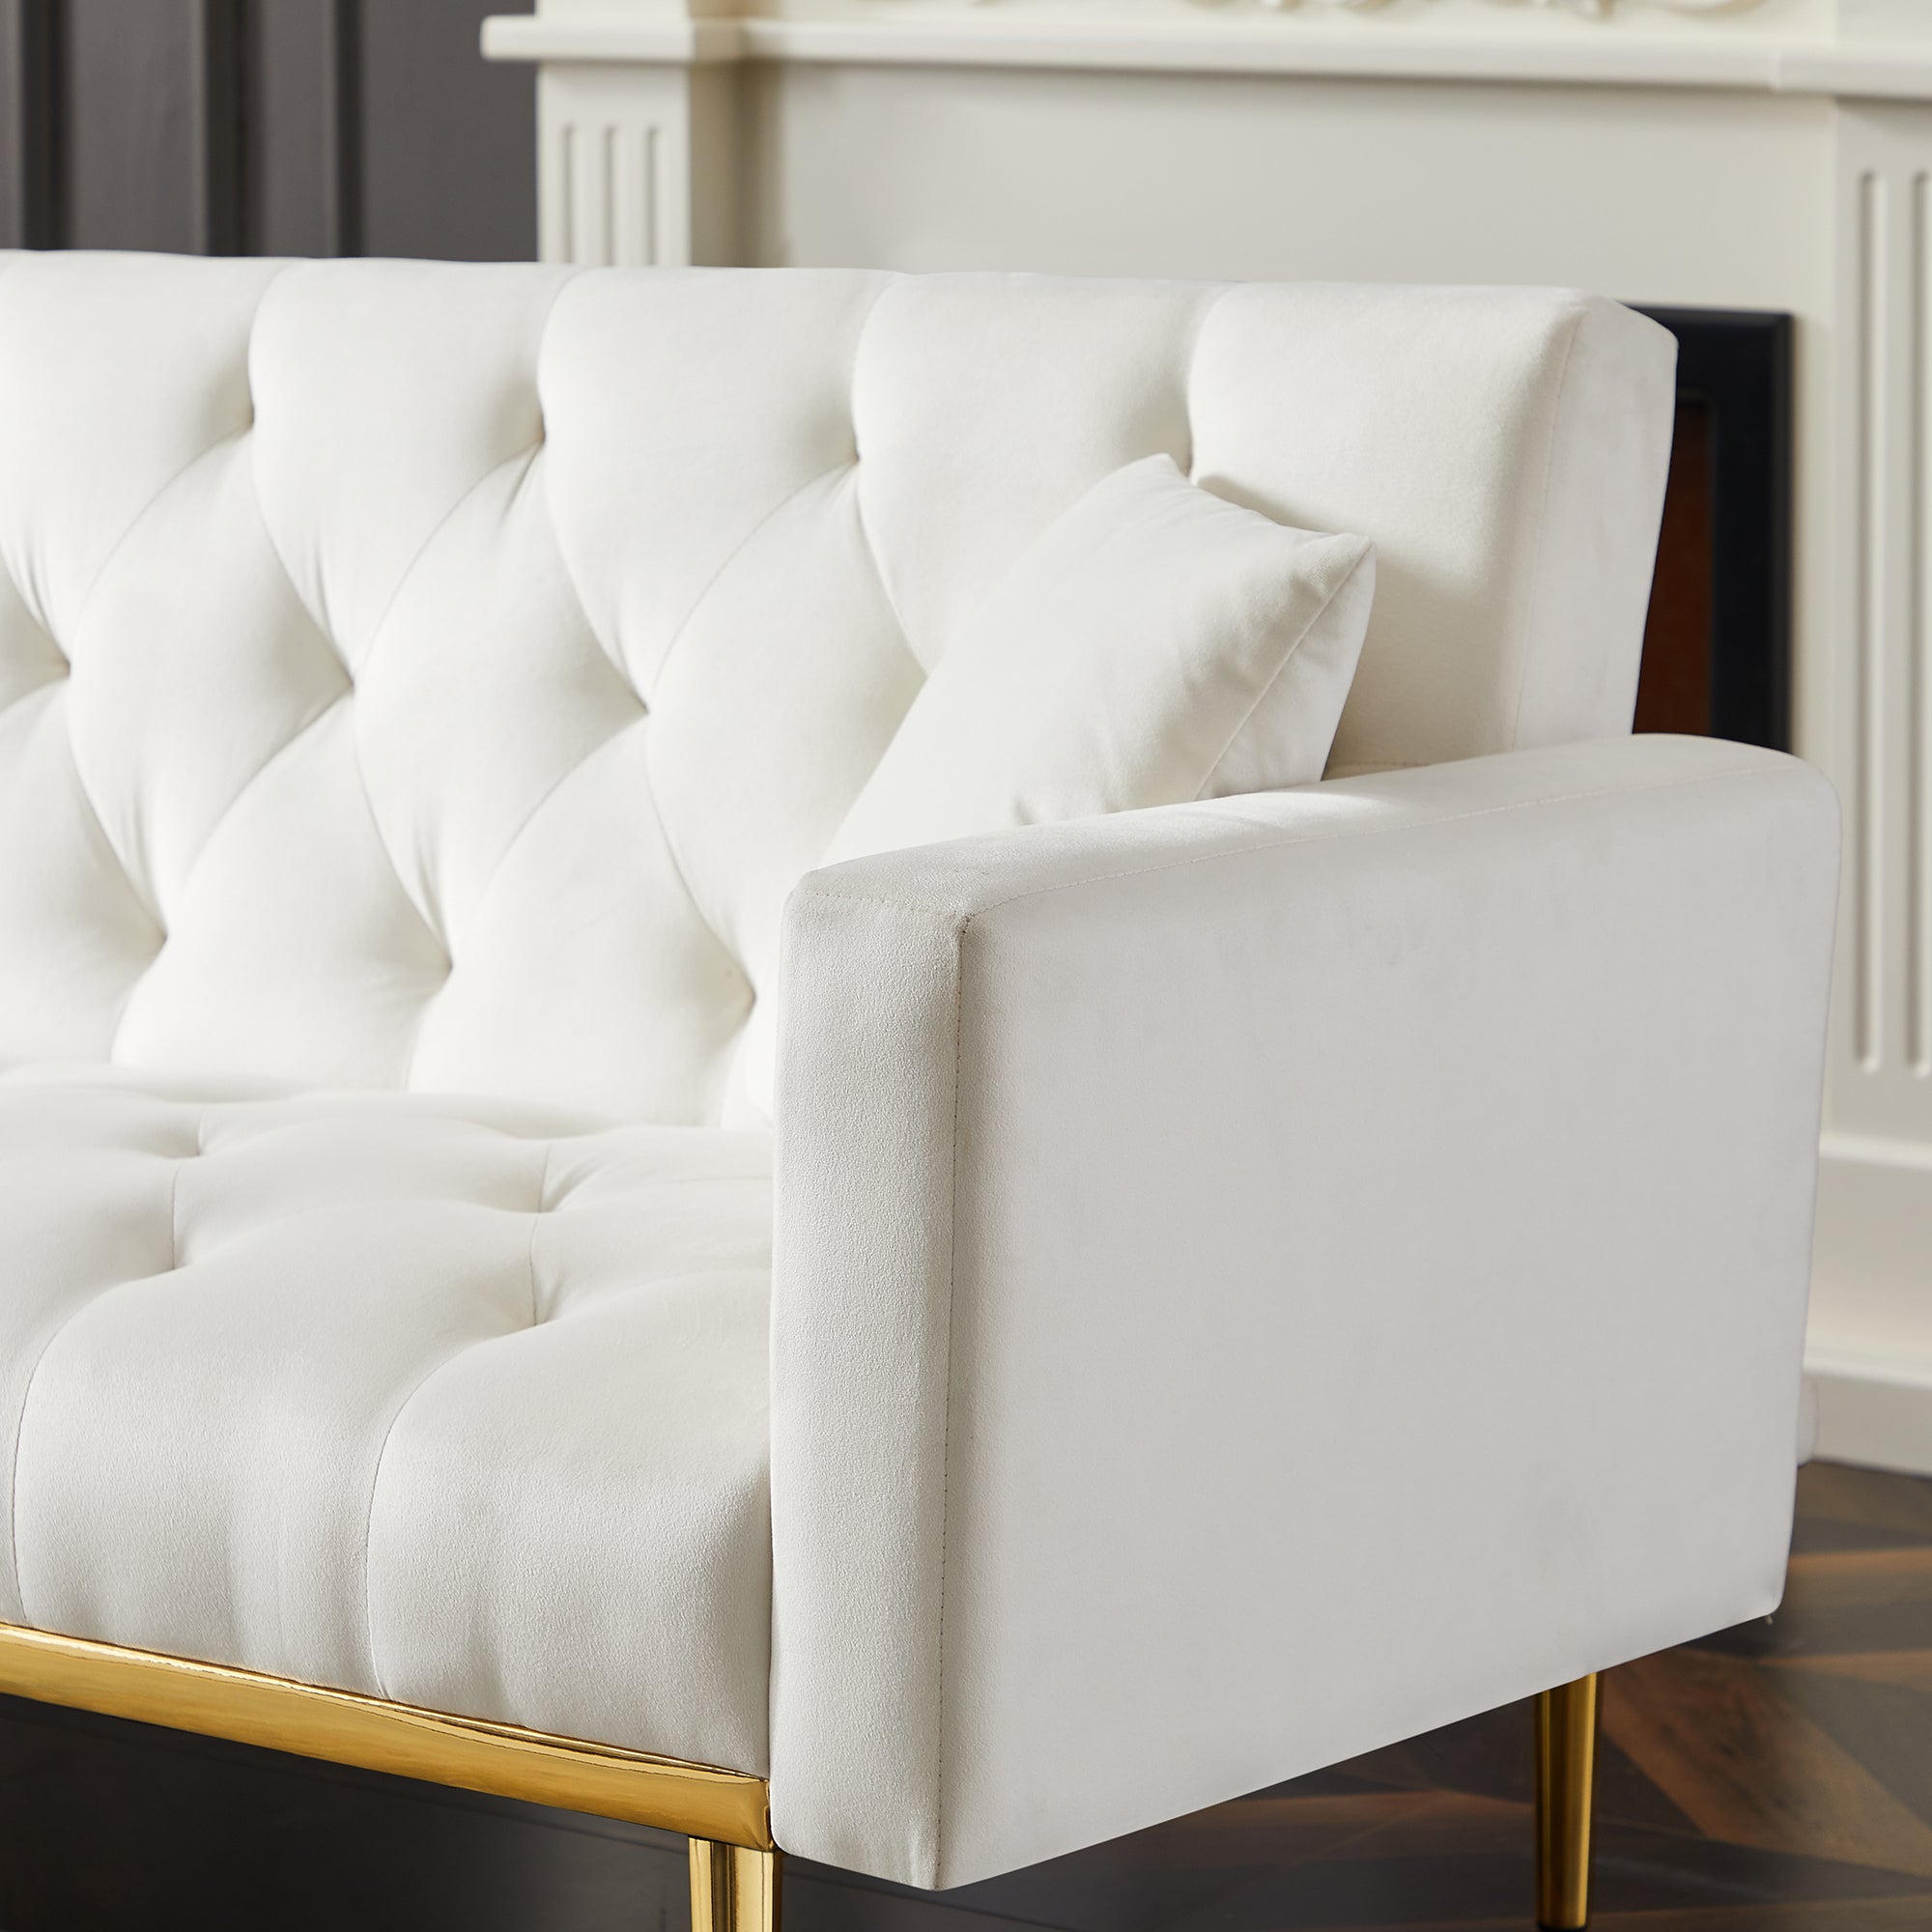 Convertible Folding Futon Sofa Bed (White)